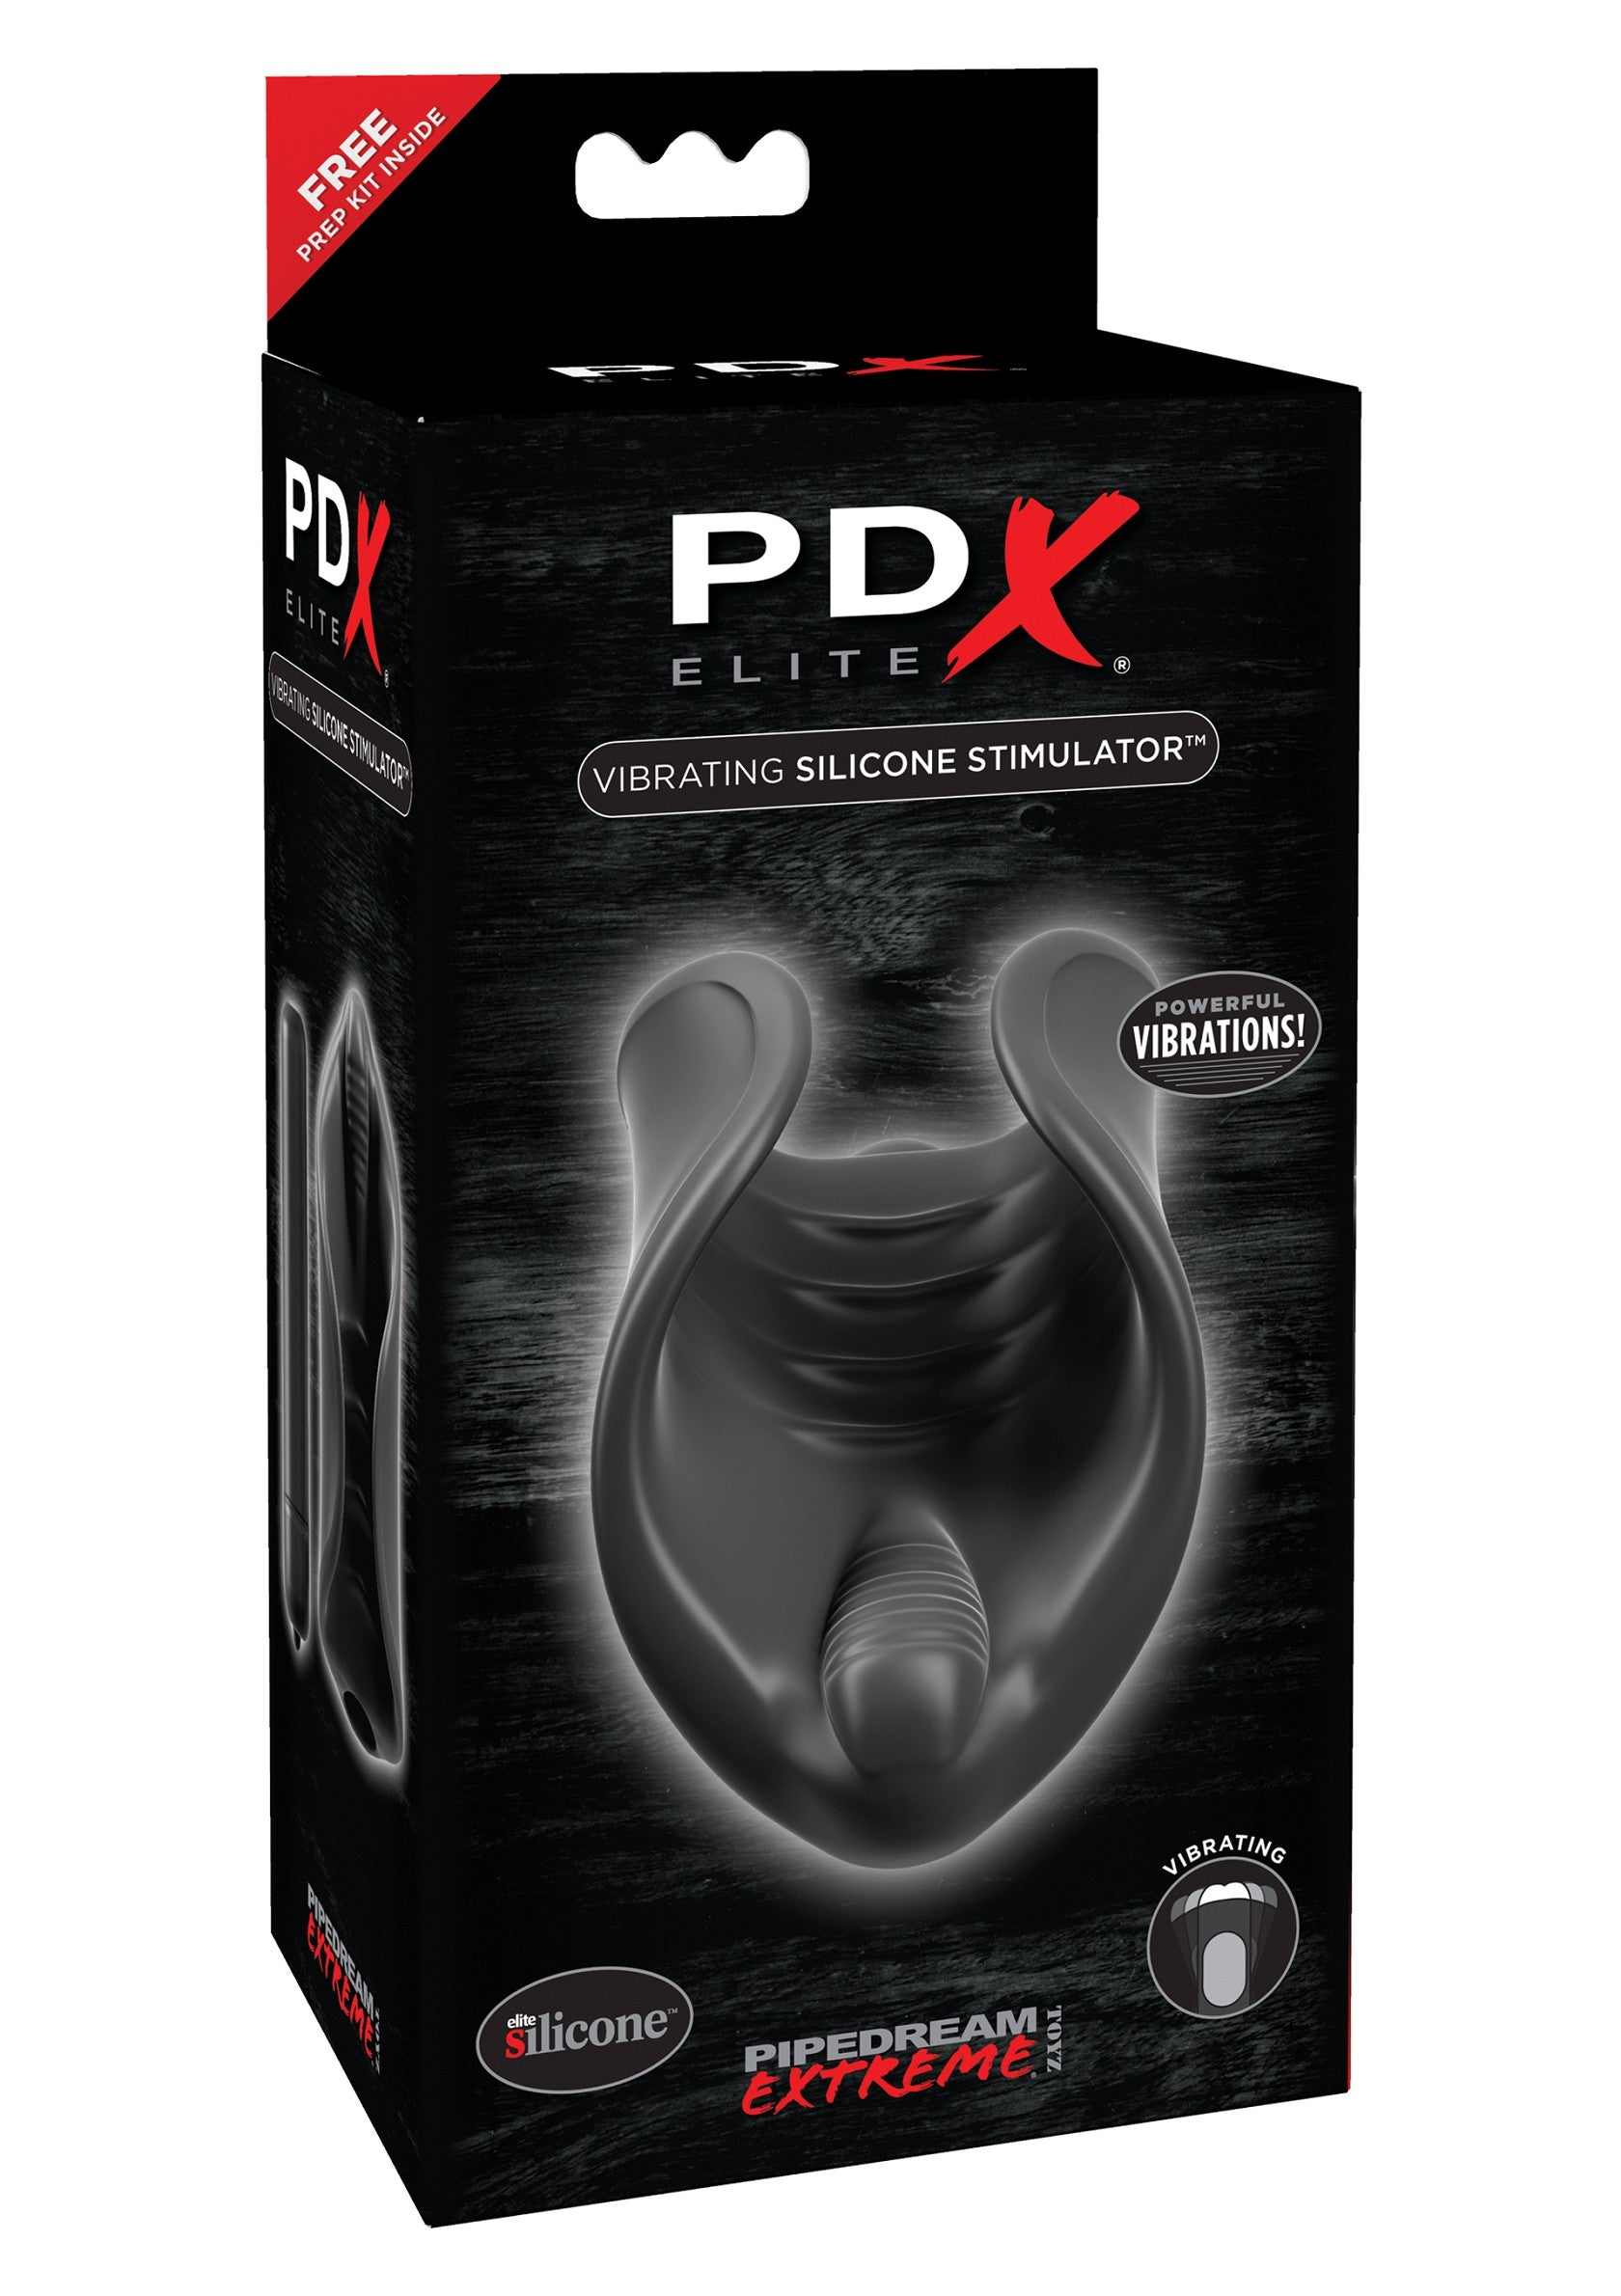 Pipedream PDX Elite Elite Vibrating Silicone Stimulator BLACK - 1